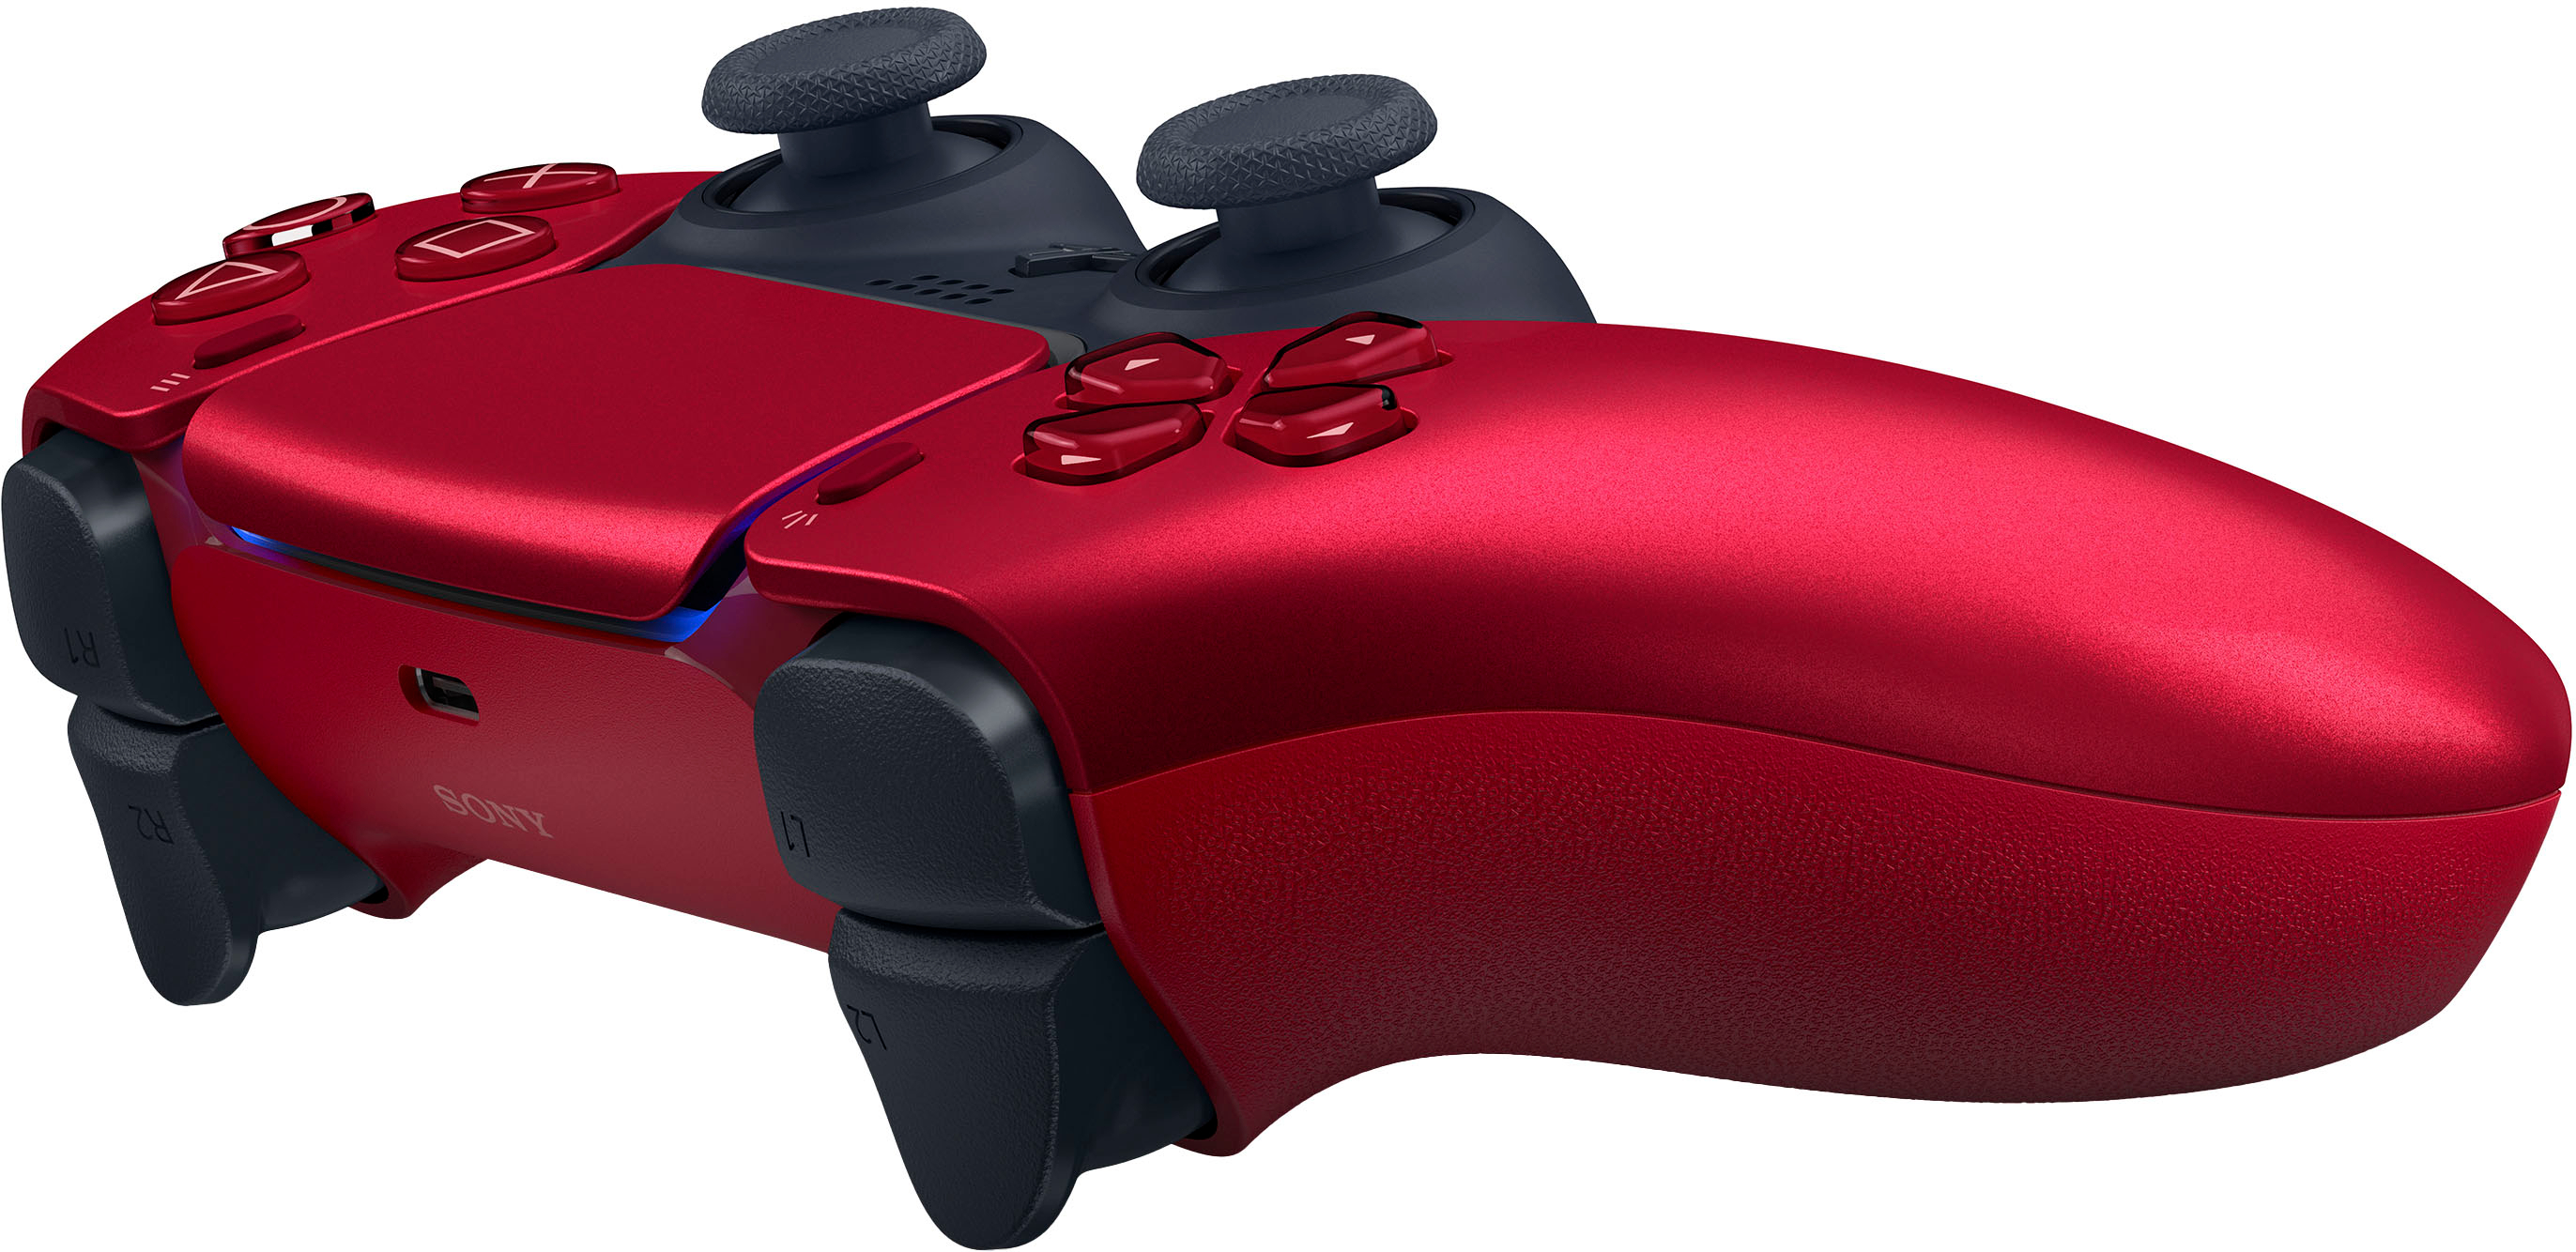 Playstation 5 DualSense Controller Dimensions & Drawings